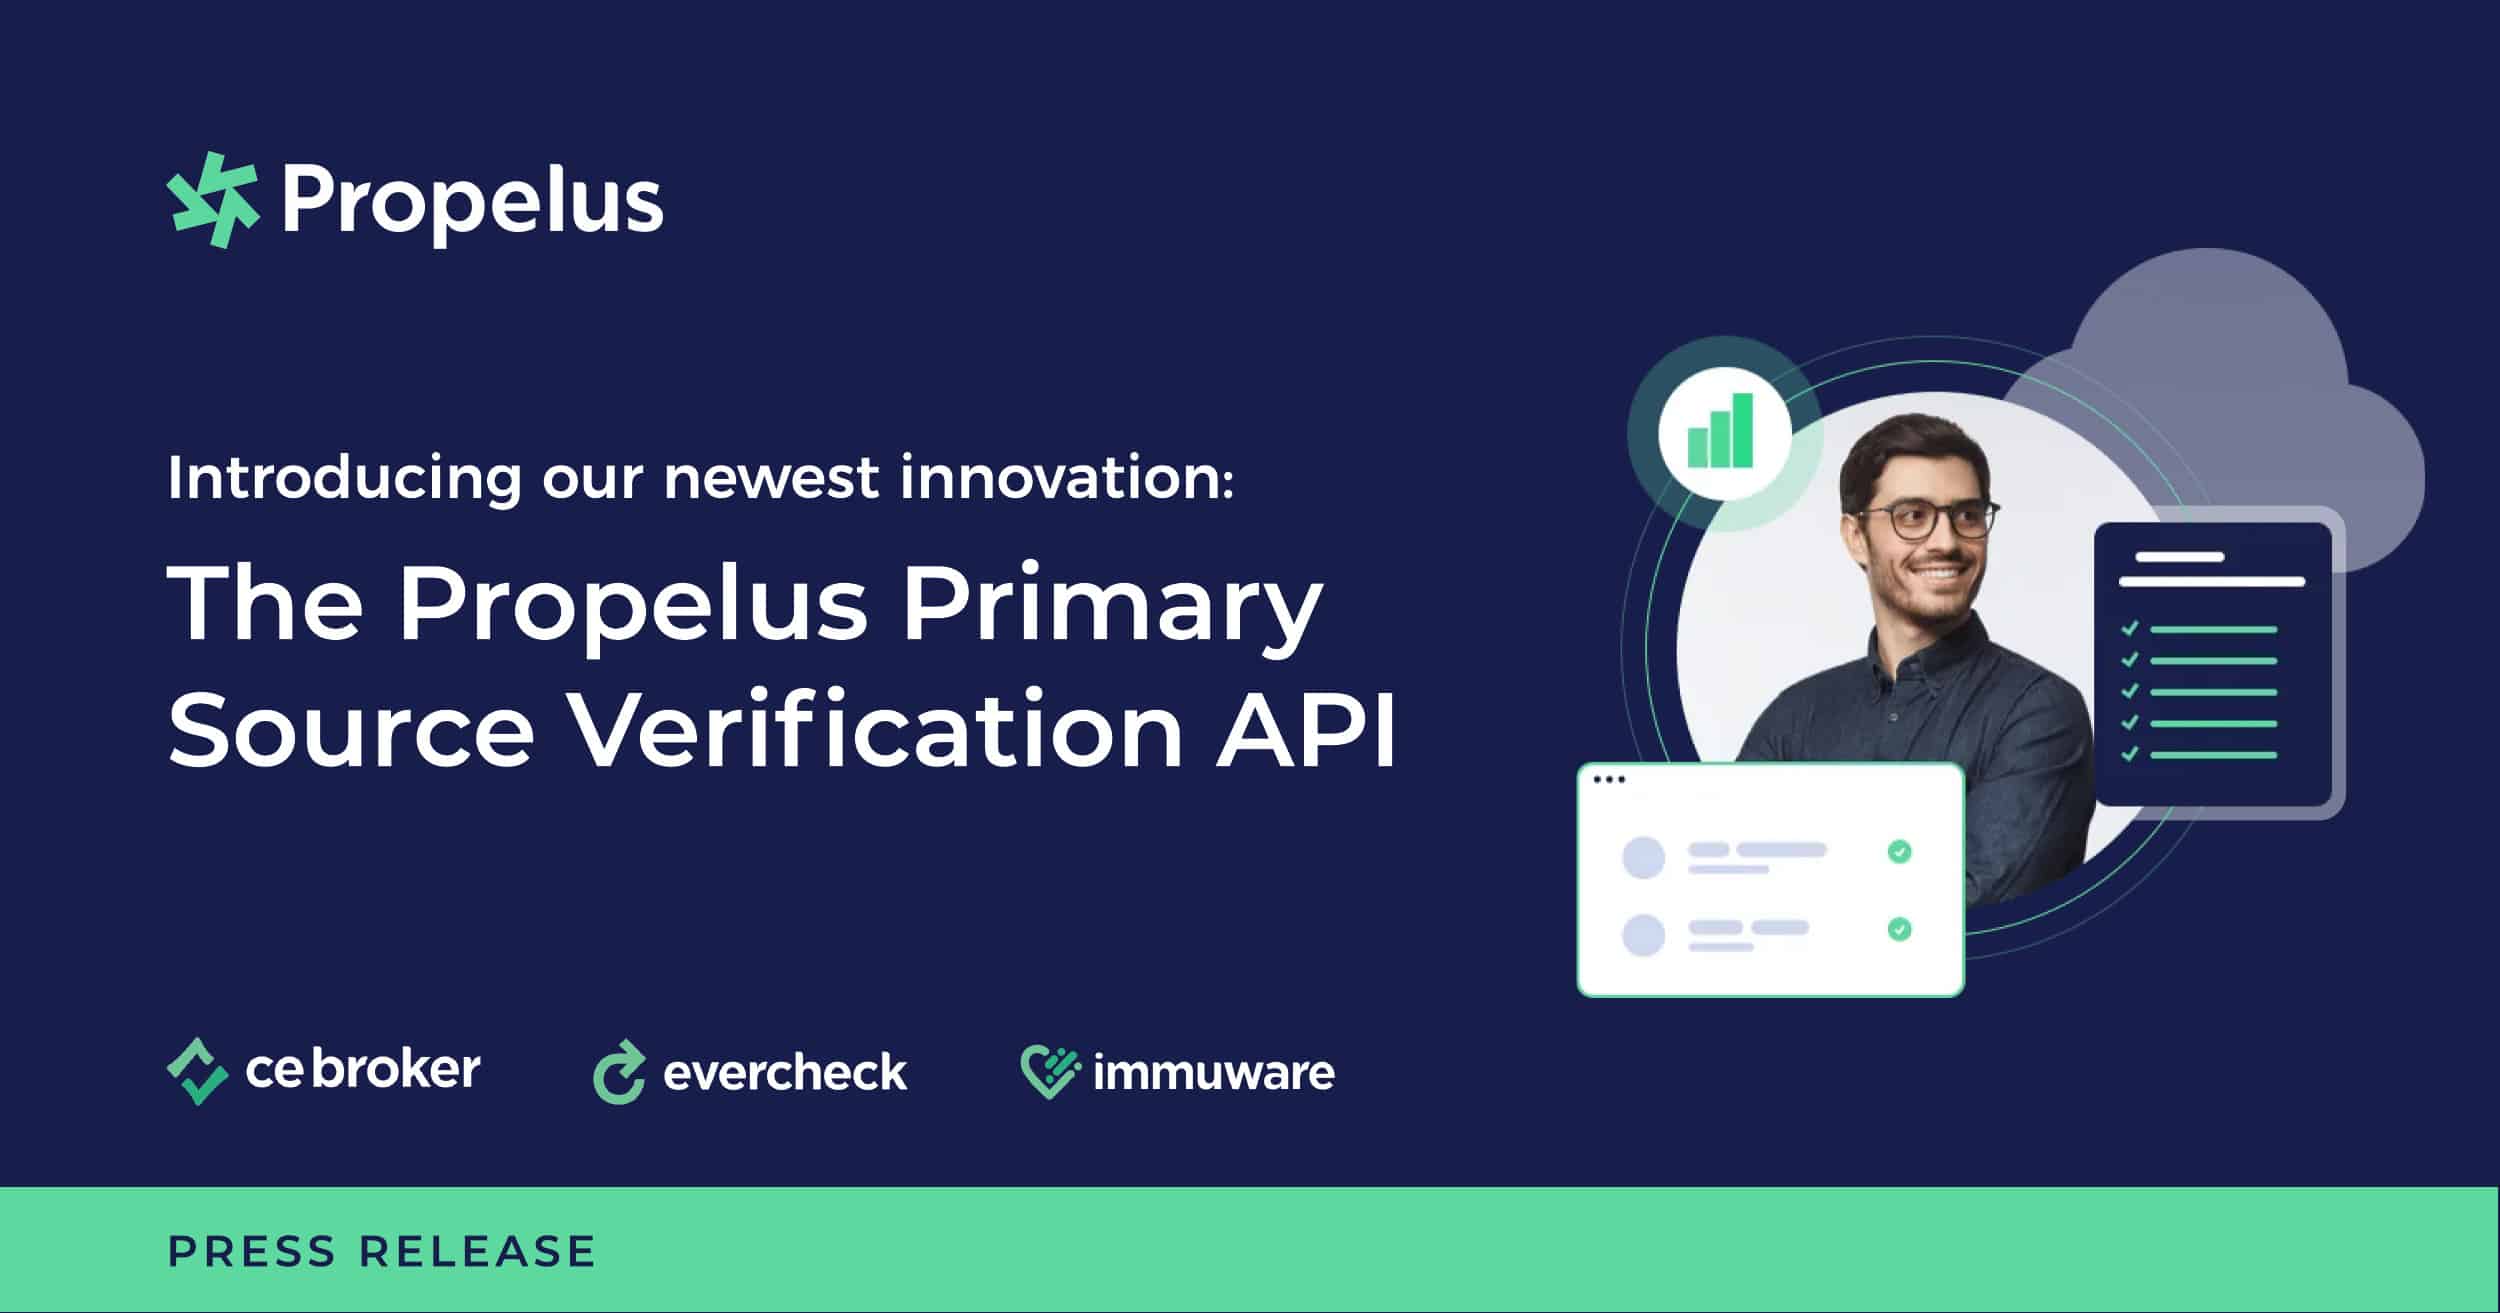 Propelus Launches Groundbreaking Primary Source Verification API